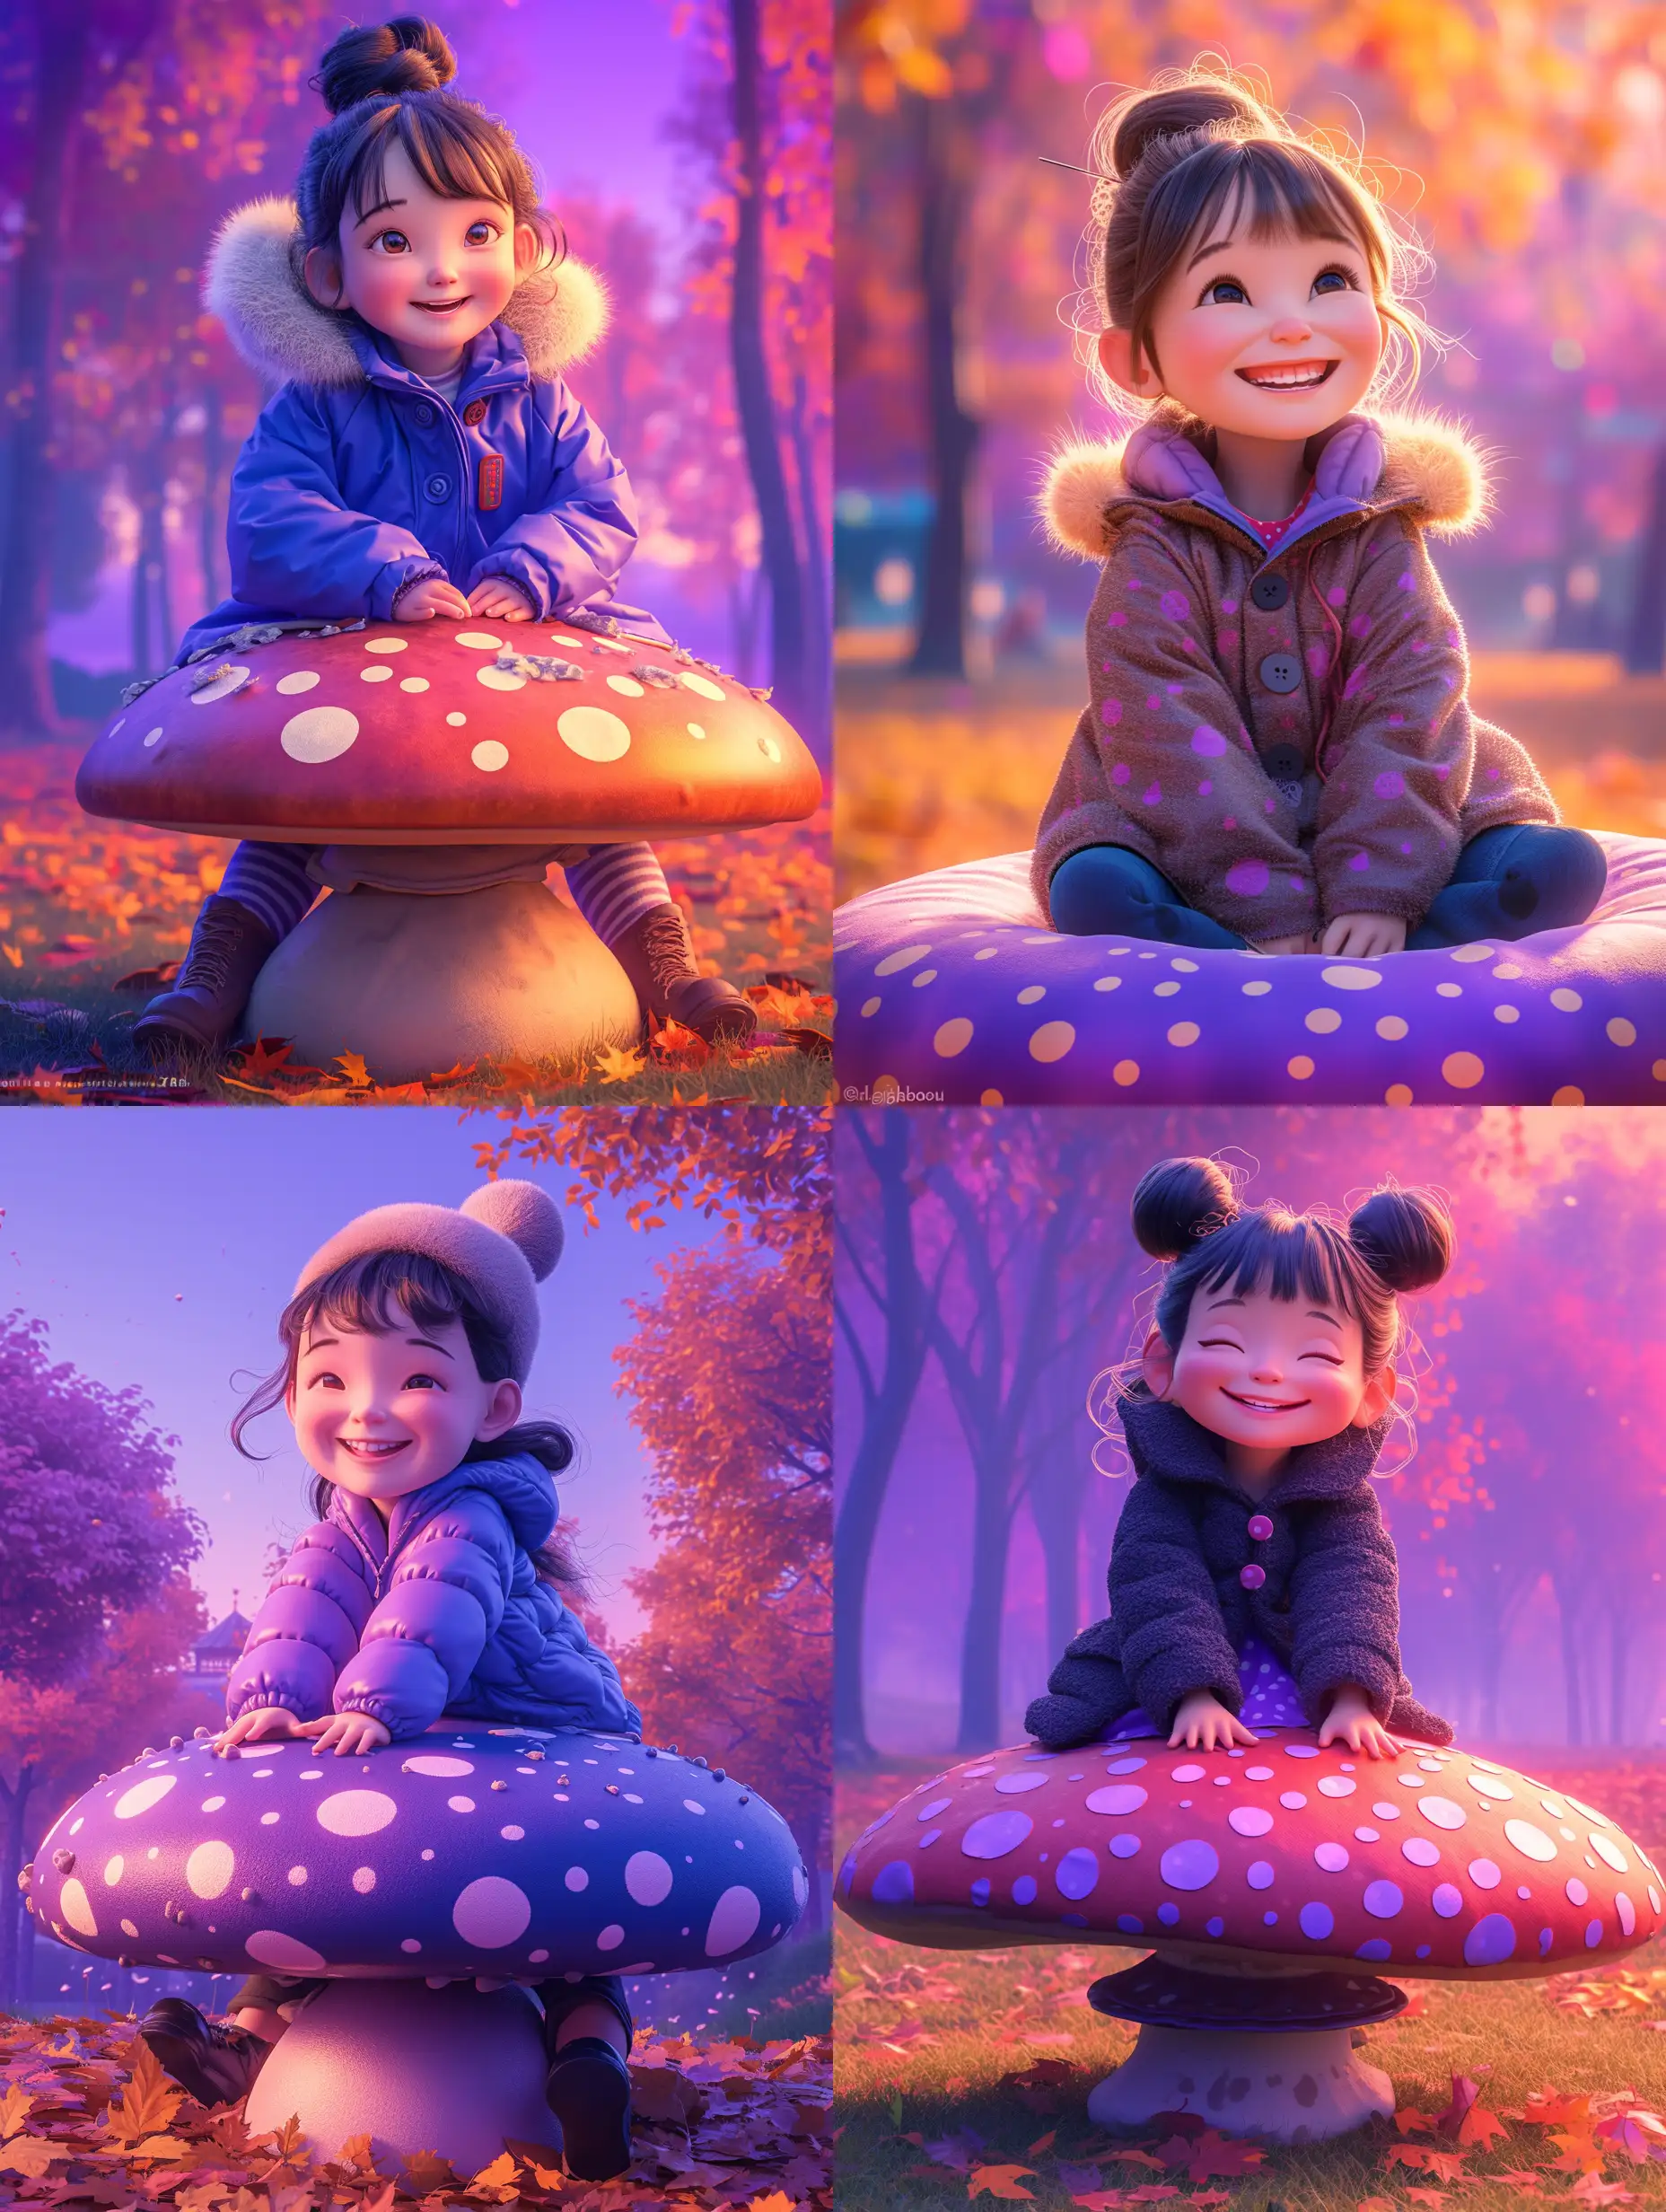 Cheerful-Chinese-Girl-Disney-Princess-Sitting-on-Giant-Mushroom-in-Autumn-Park